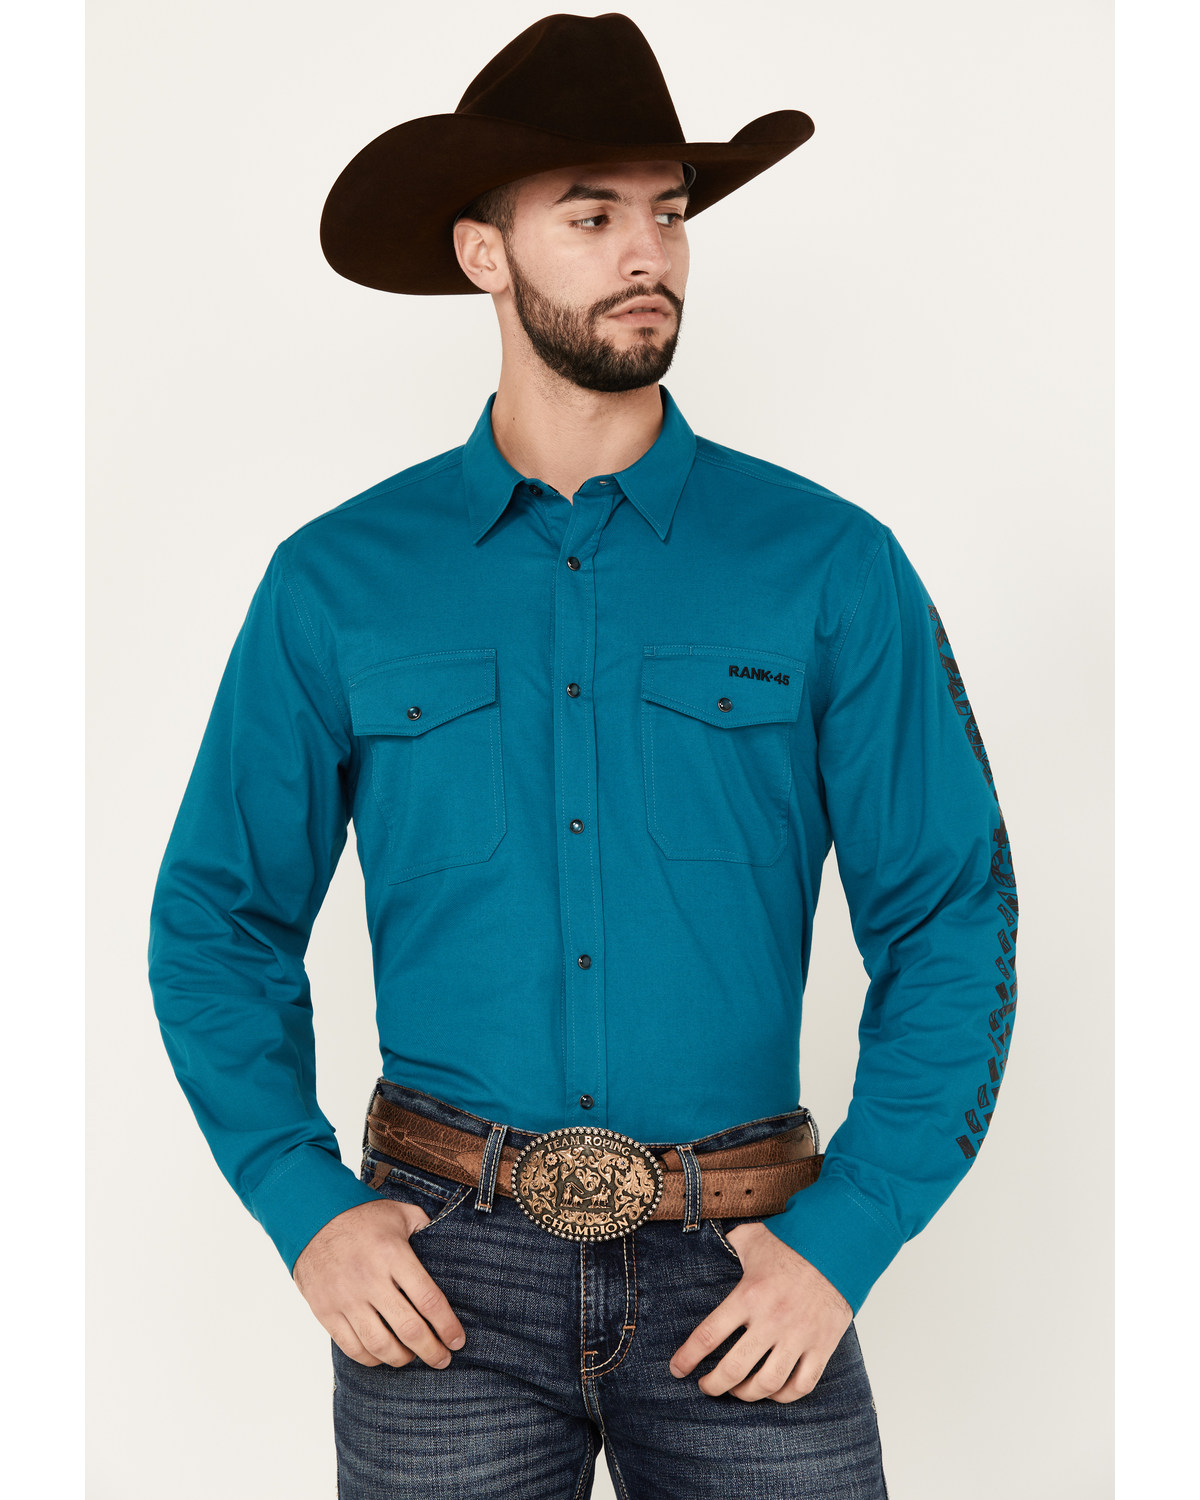 RANK 45® Men's Solid Logo Long Sleeve Performance Stretch Western Shirt